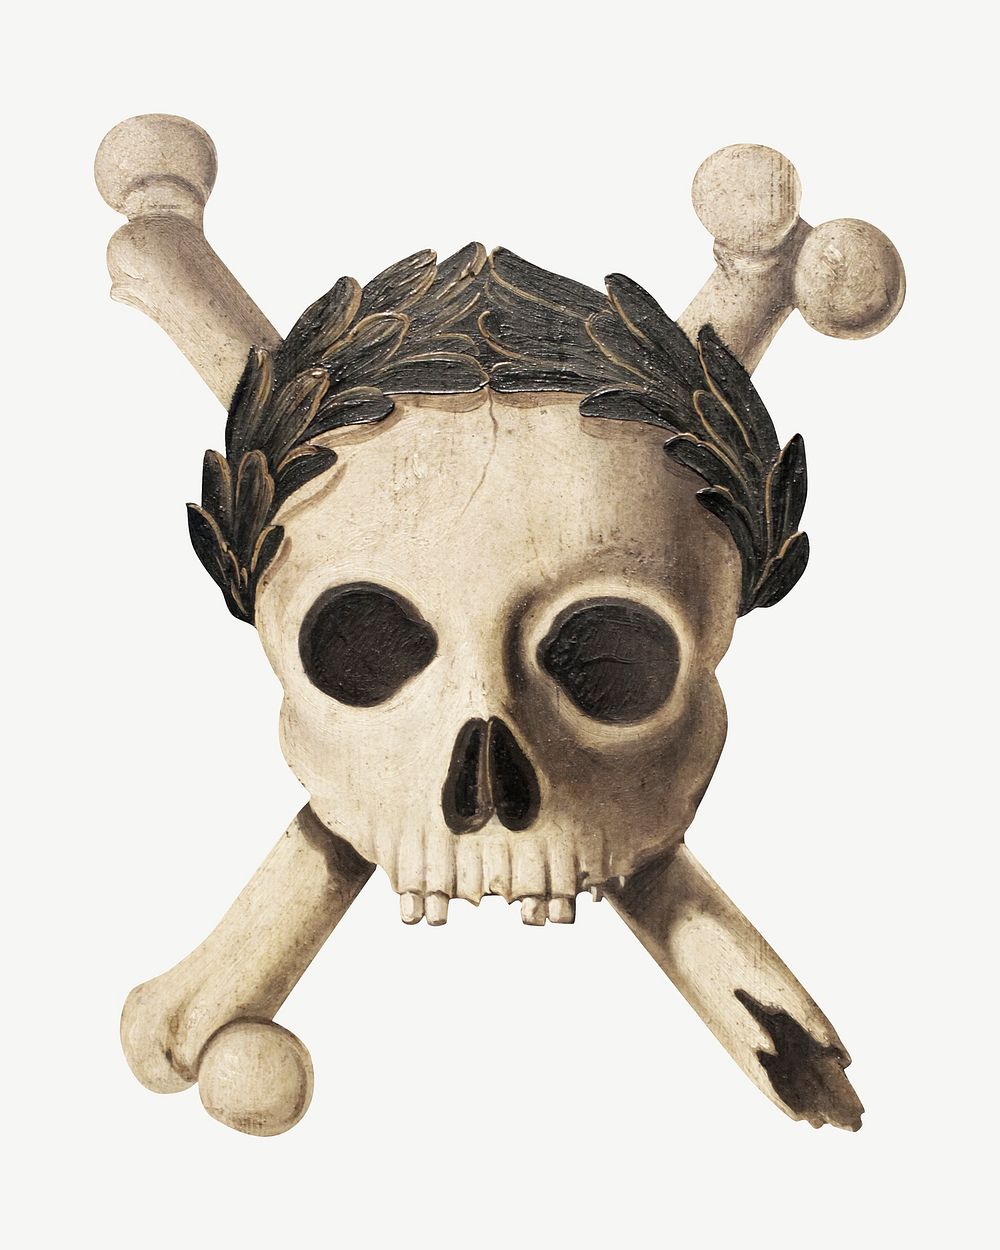 Human skull vintage illustration psd. Remixed by rawpixel. 